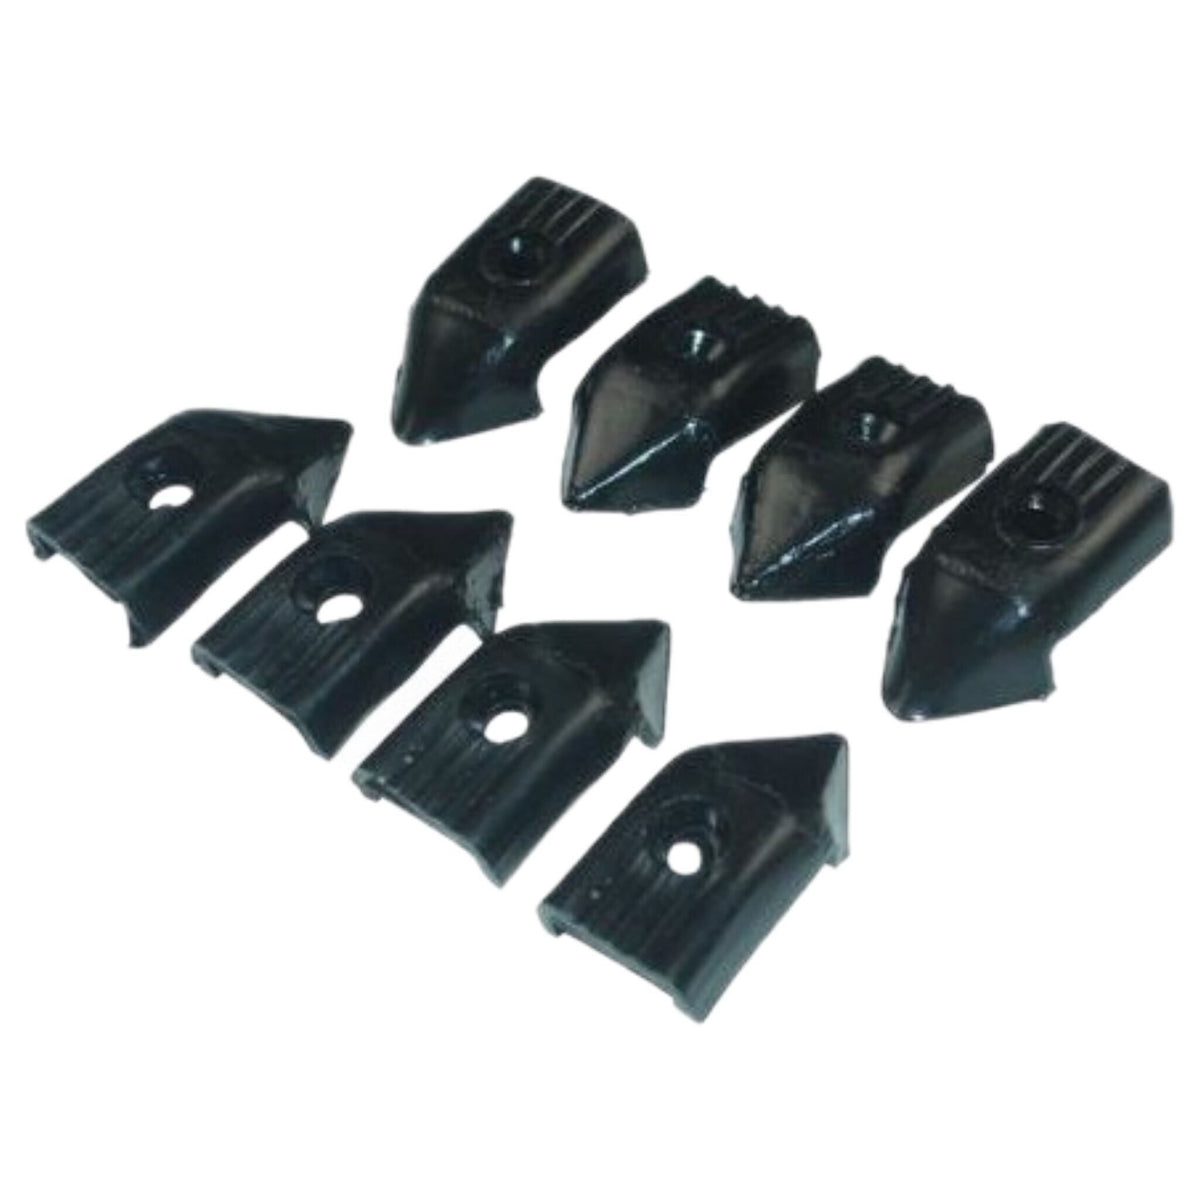 Lambretta GP DL Floor Runner Rubber End Cap Kits - Black Plastic